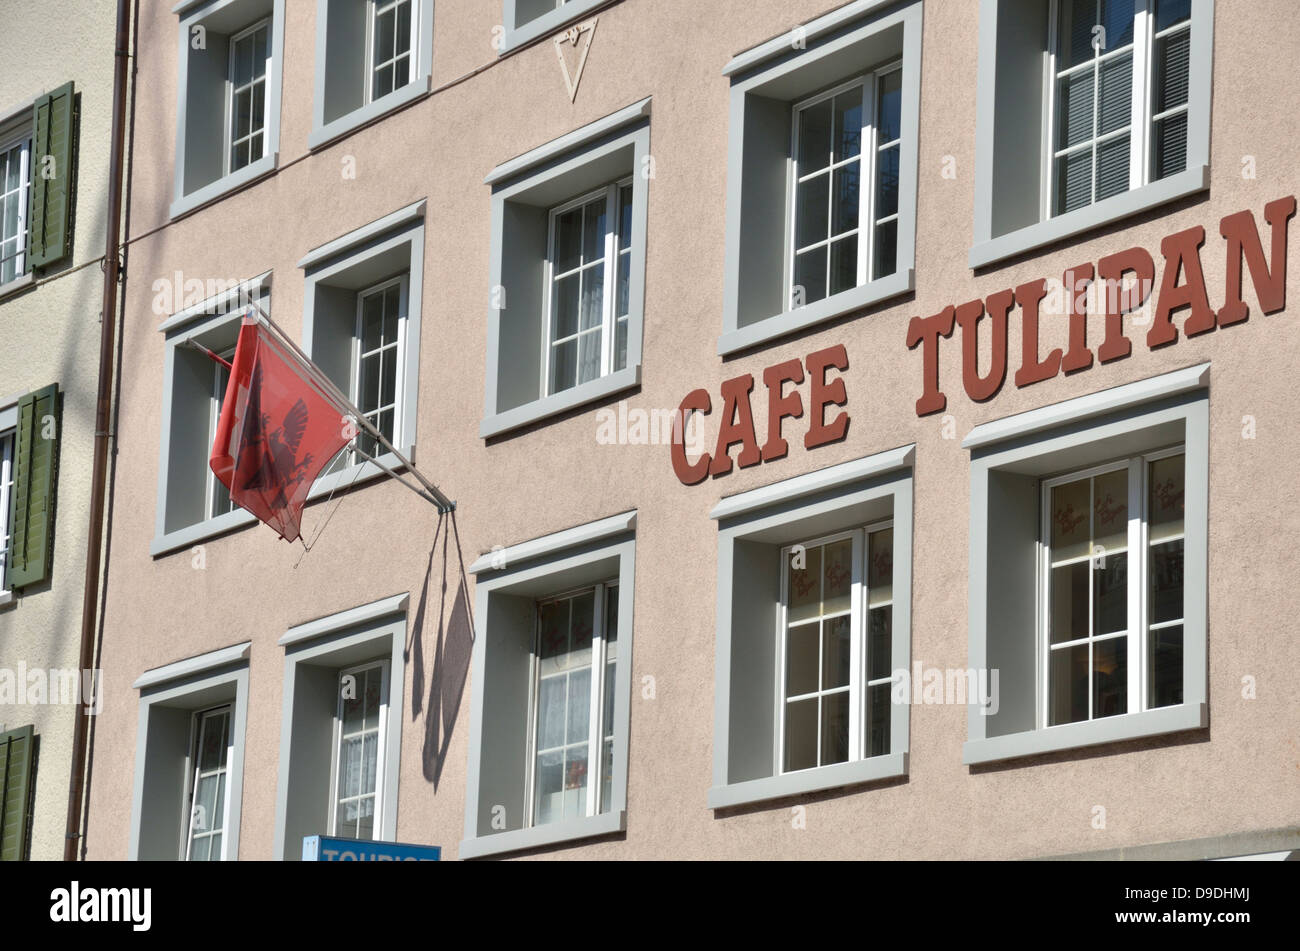 Cafe Tulipan, Einsiedeln, Schwyz, Switzerland. Stock Photo